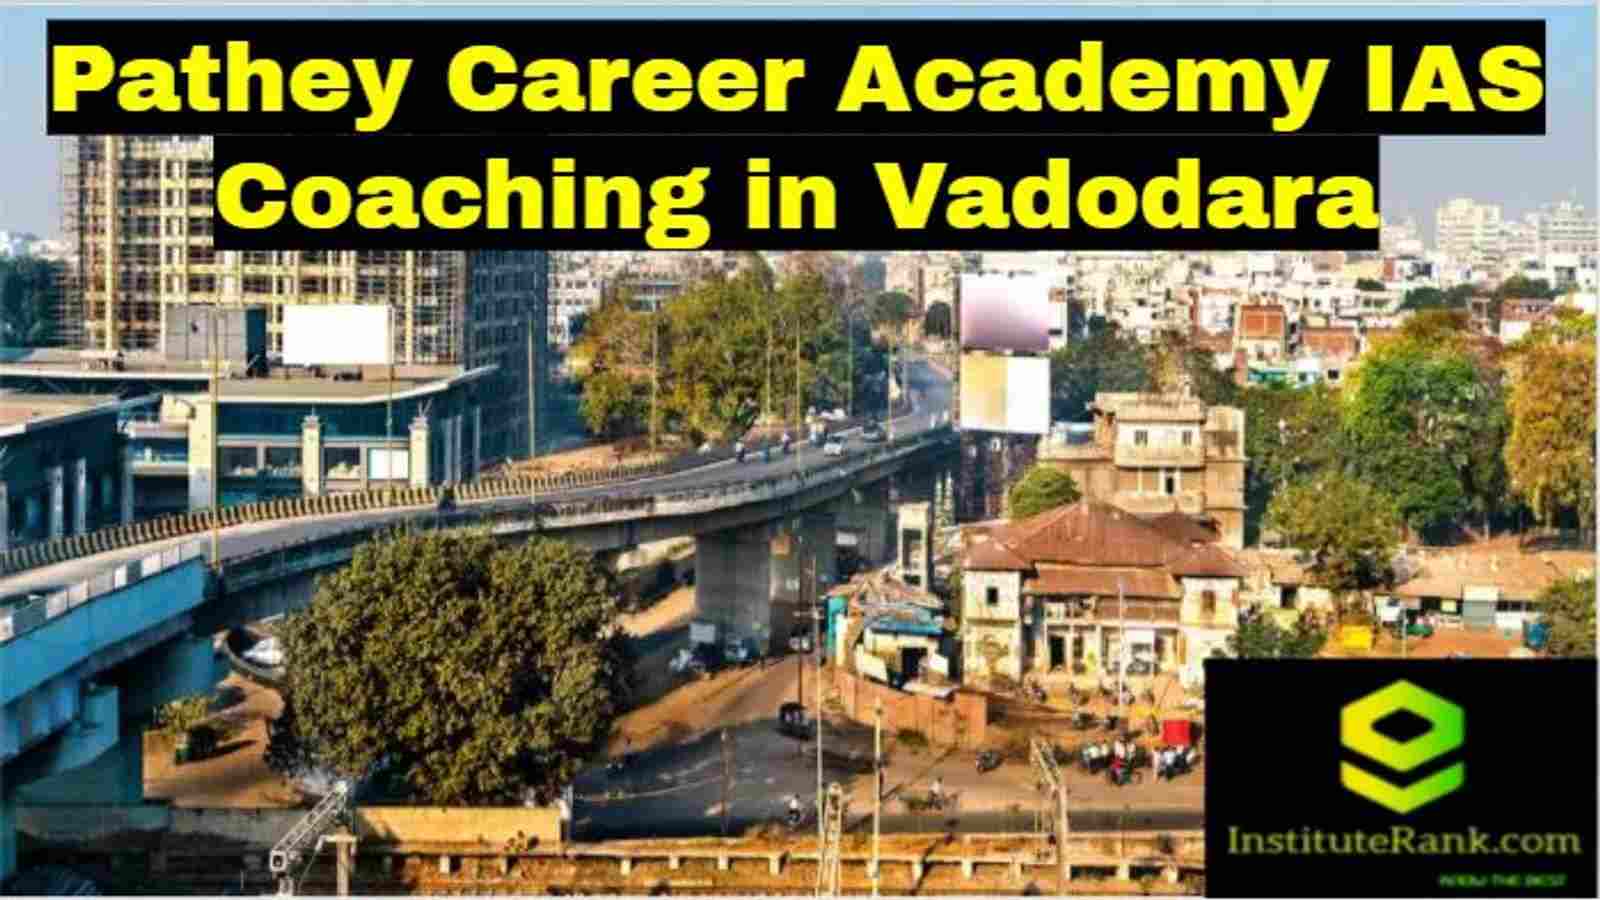 Pathey Career Academy IAS Coaching in Vadodara